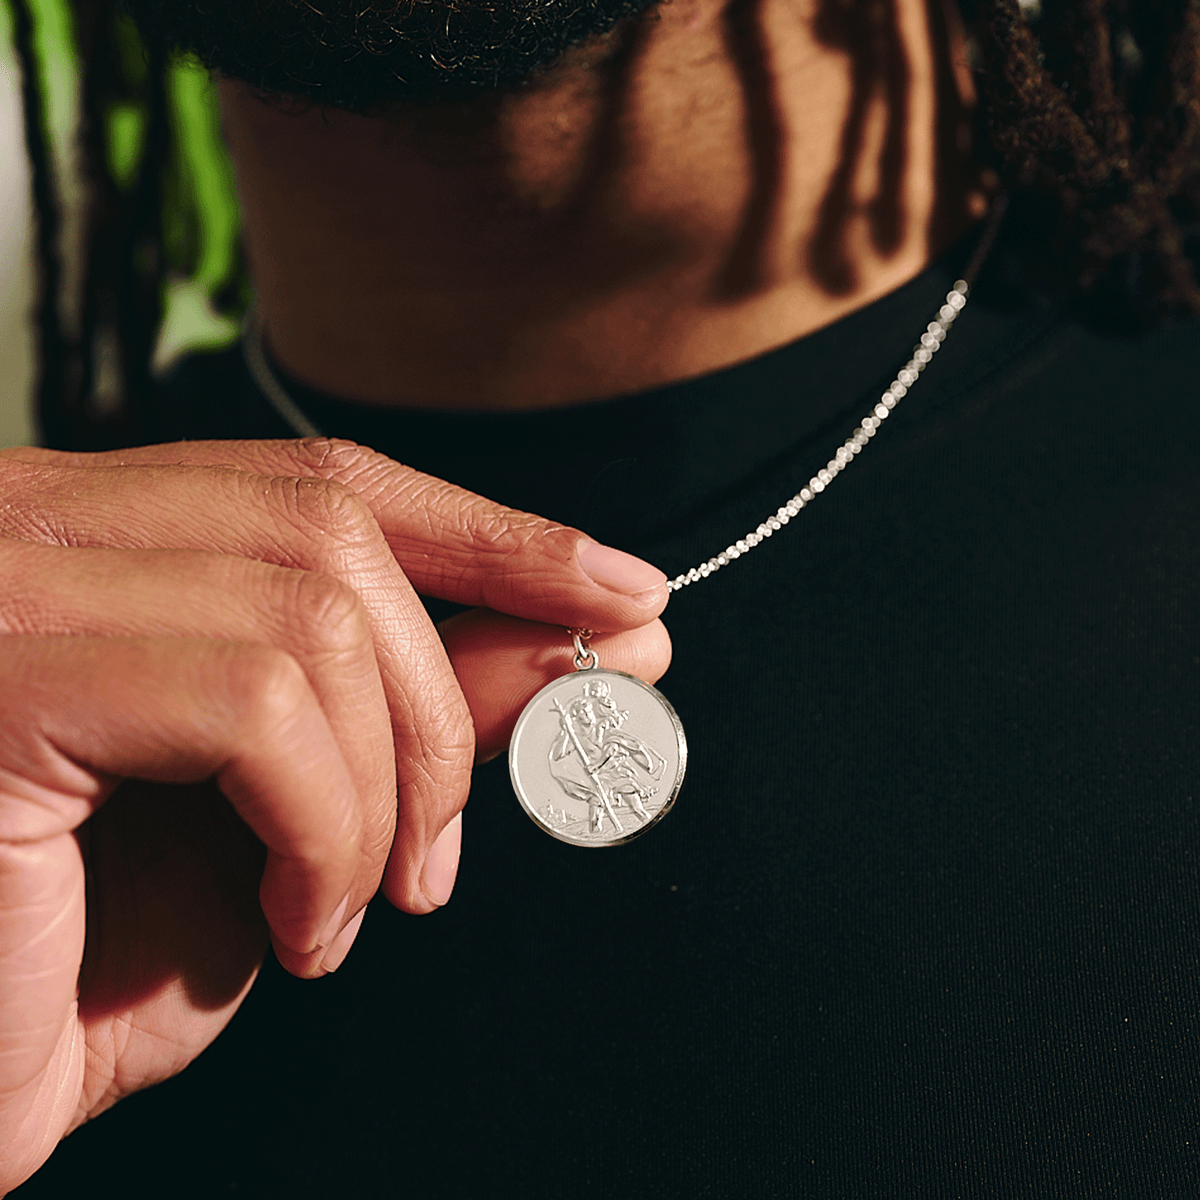 24mm wide silver saint christopher necklace for men